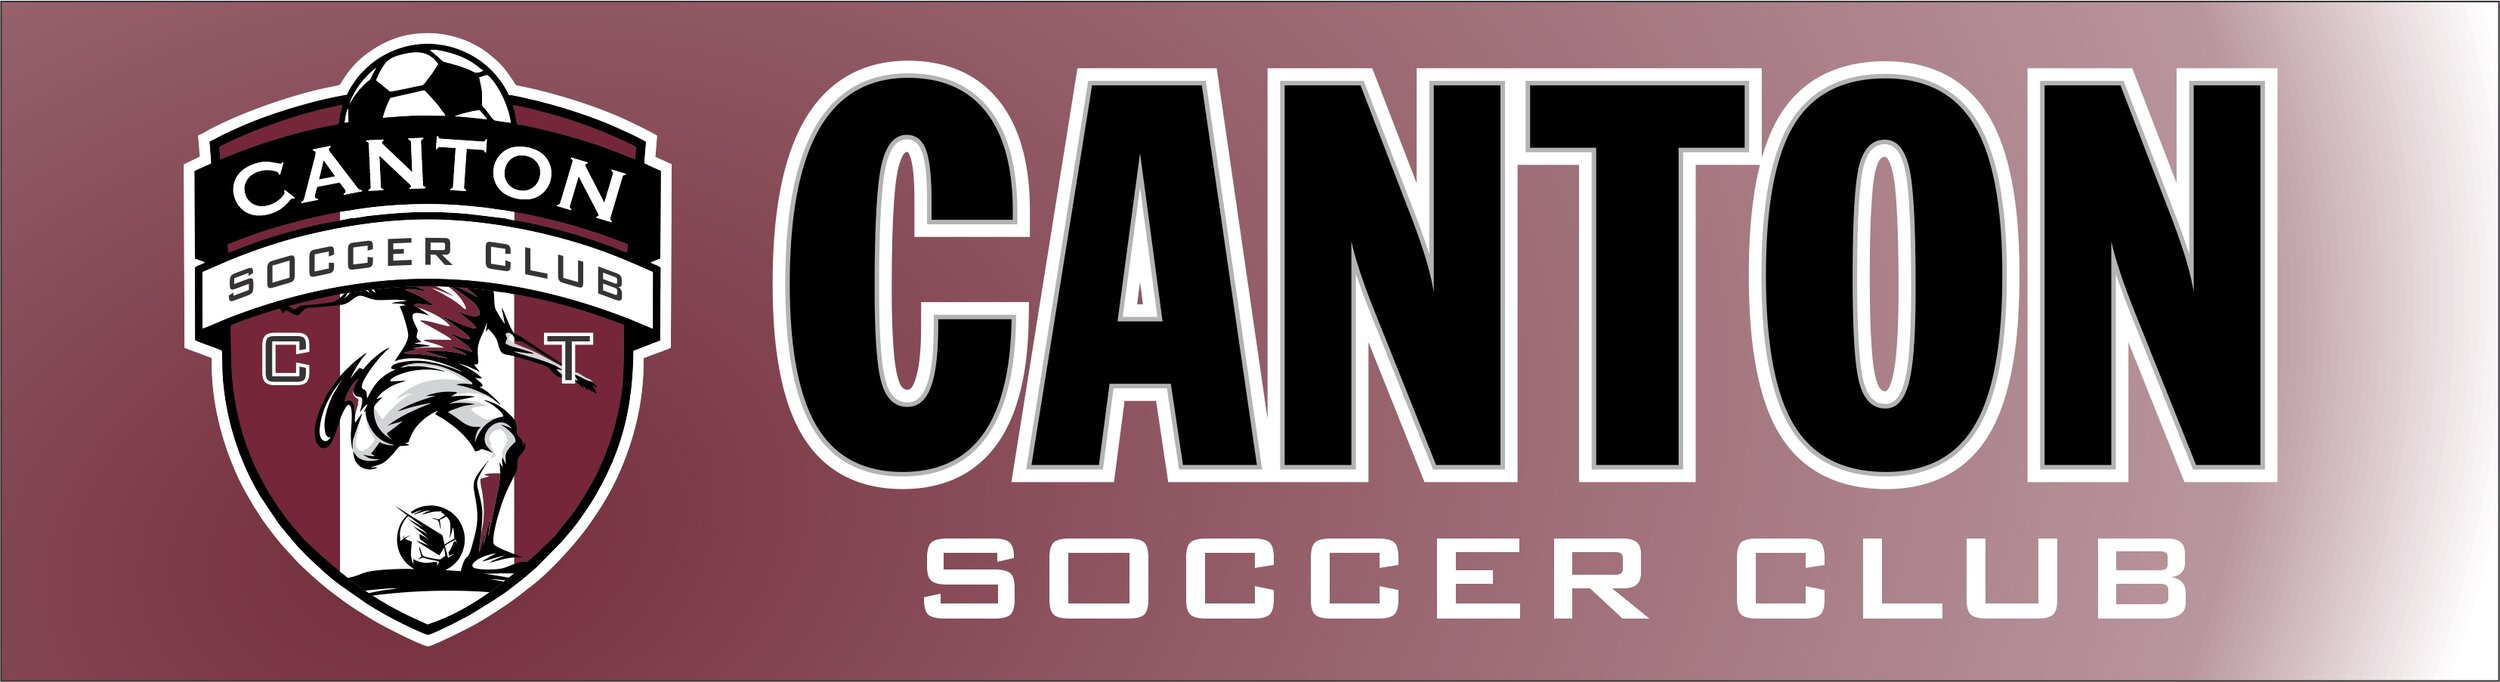 canton travel soccer